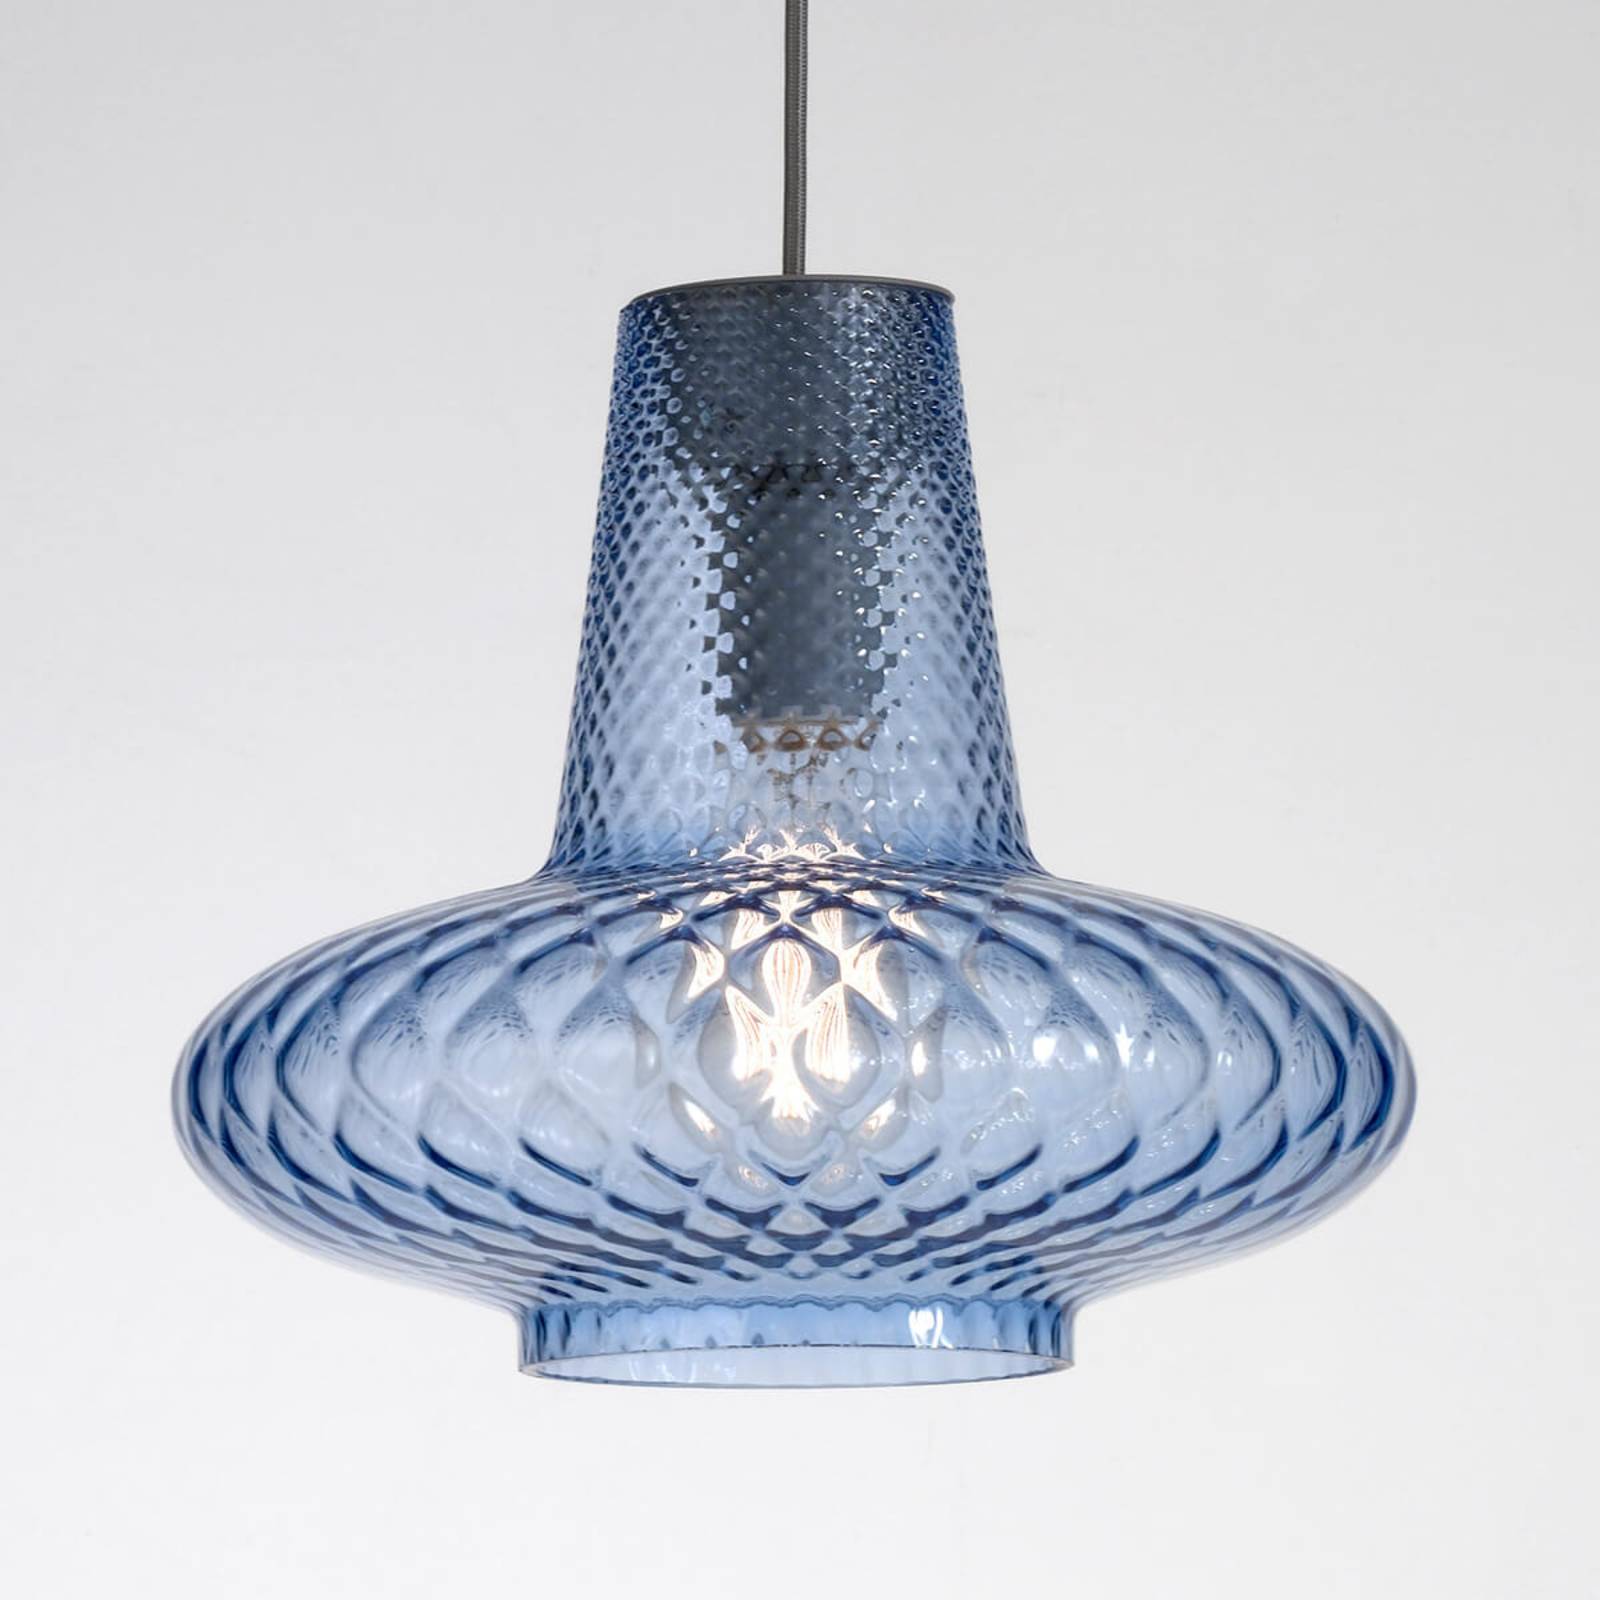 Glazen hanglamp Giulietta, blauw